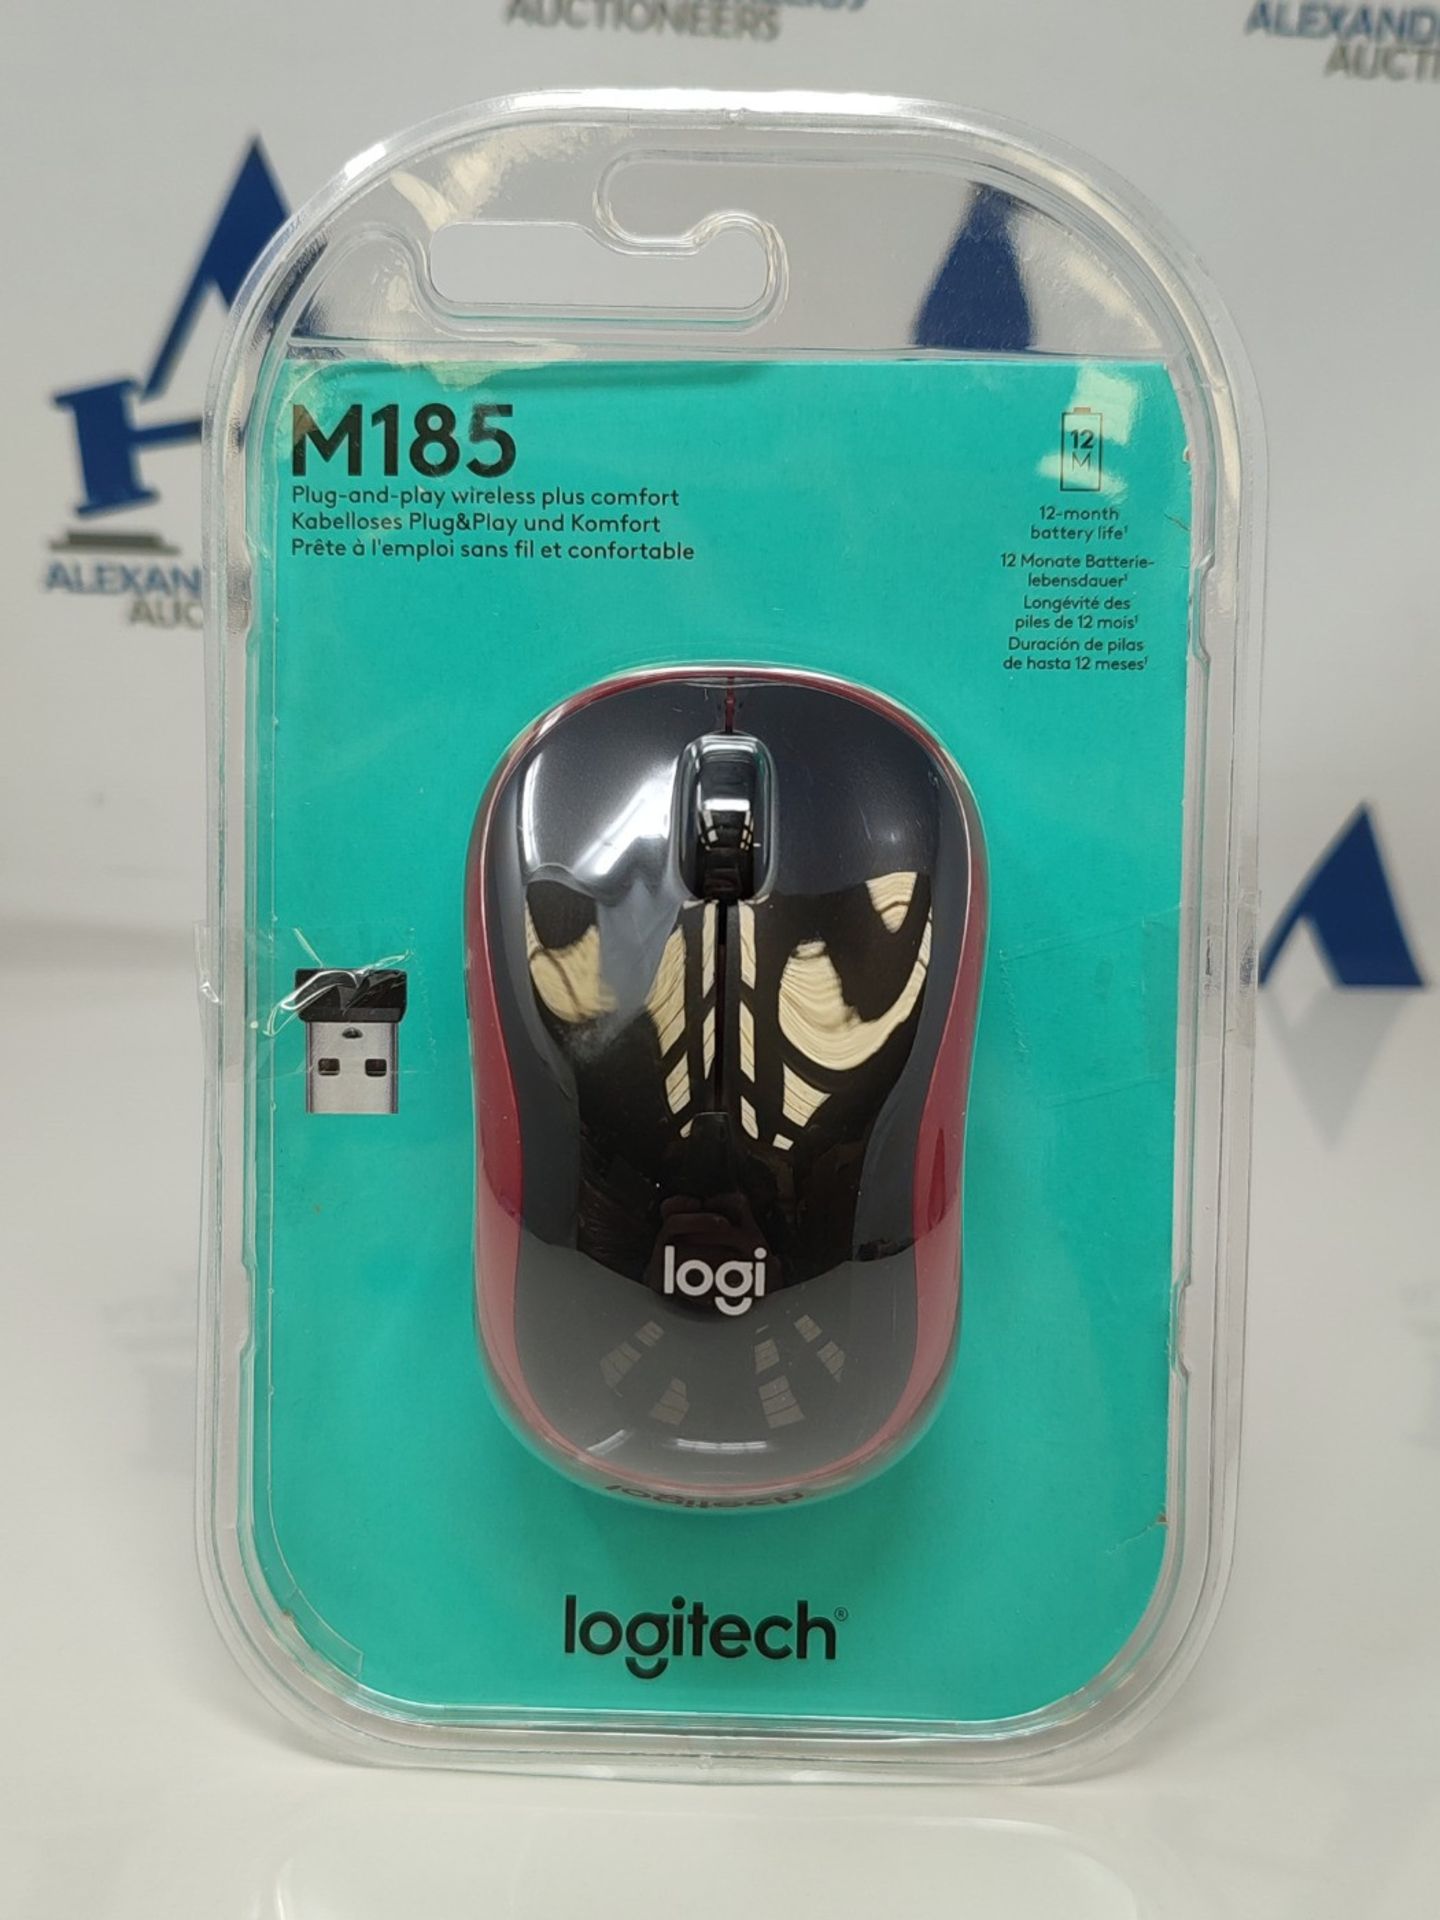 Logitech M185 Wireless Mouse, 2.4 GHz with Mini USB Receiver, 12 Month Battery Life, 1 - Bild 2 aus 3